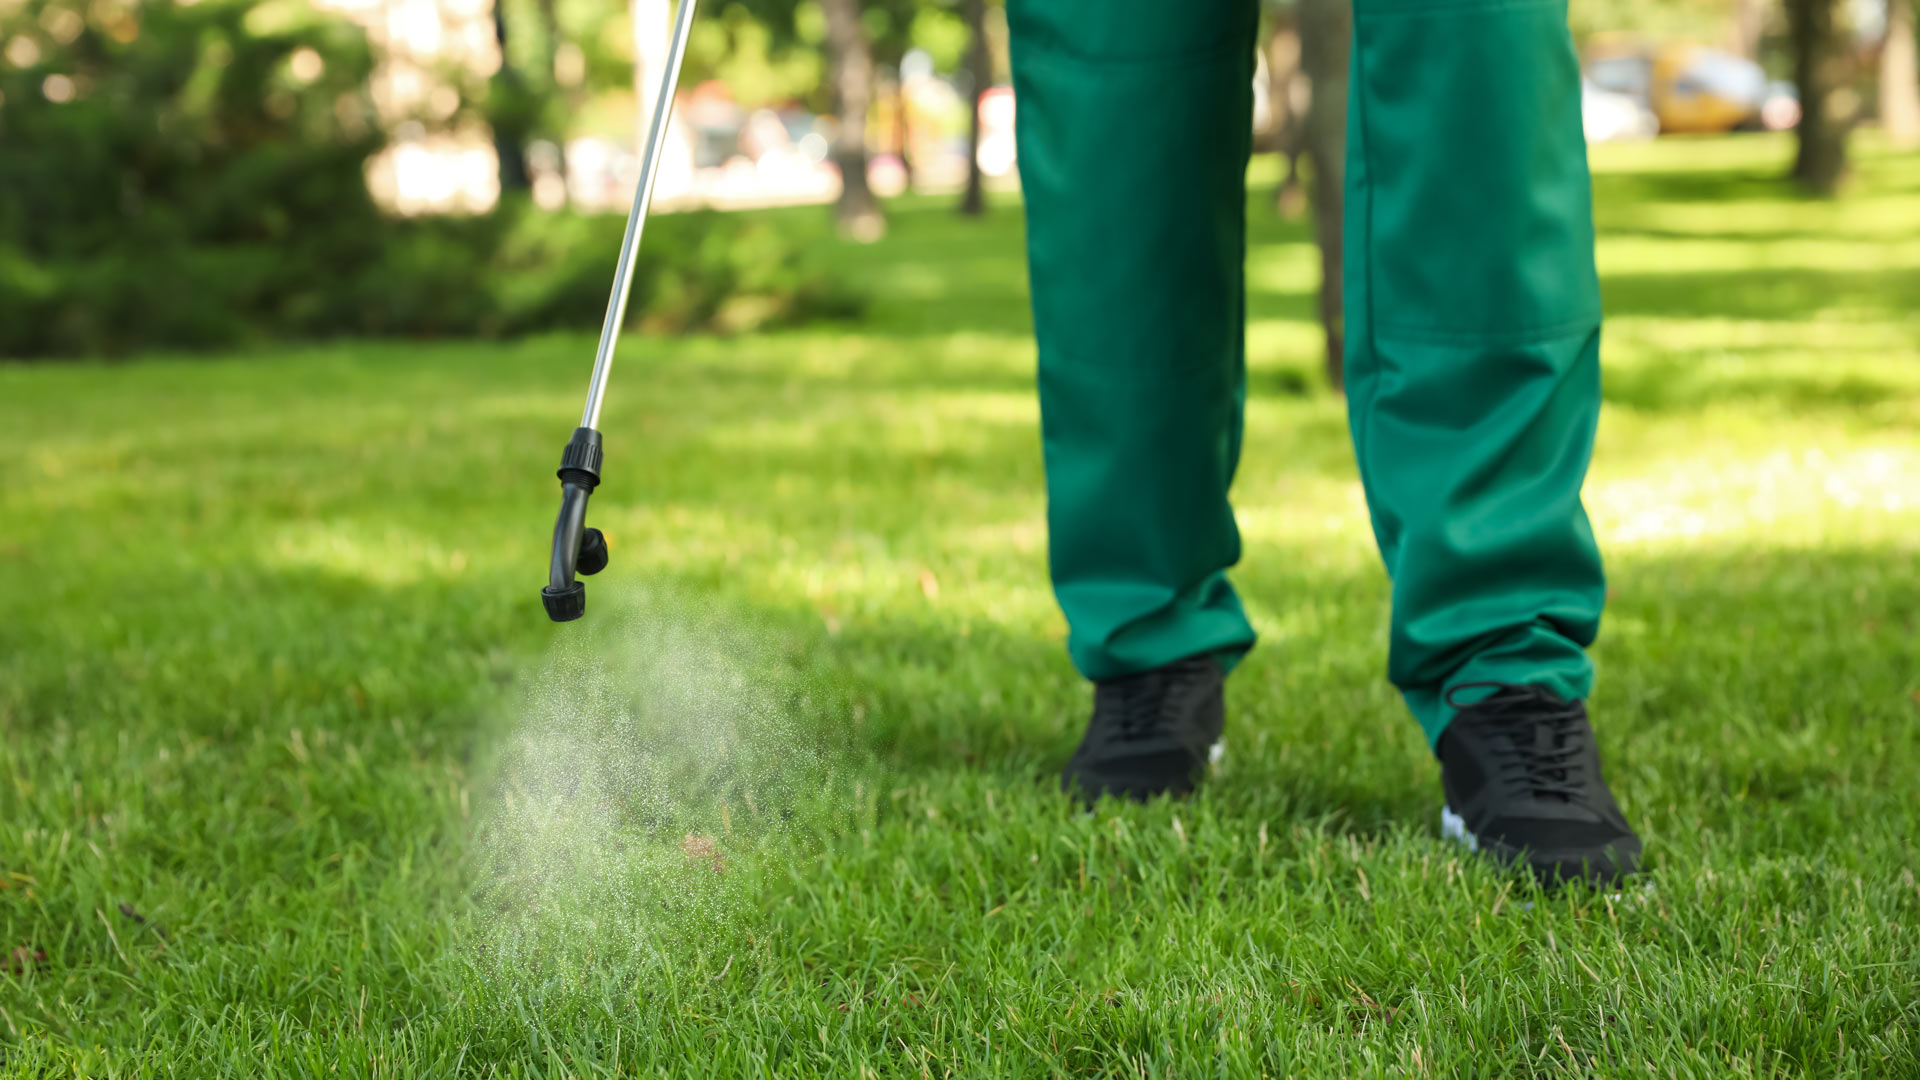 Professional applying fertilizer treatments to a lawn in Mesilla, NM.